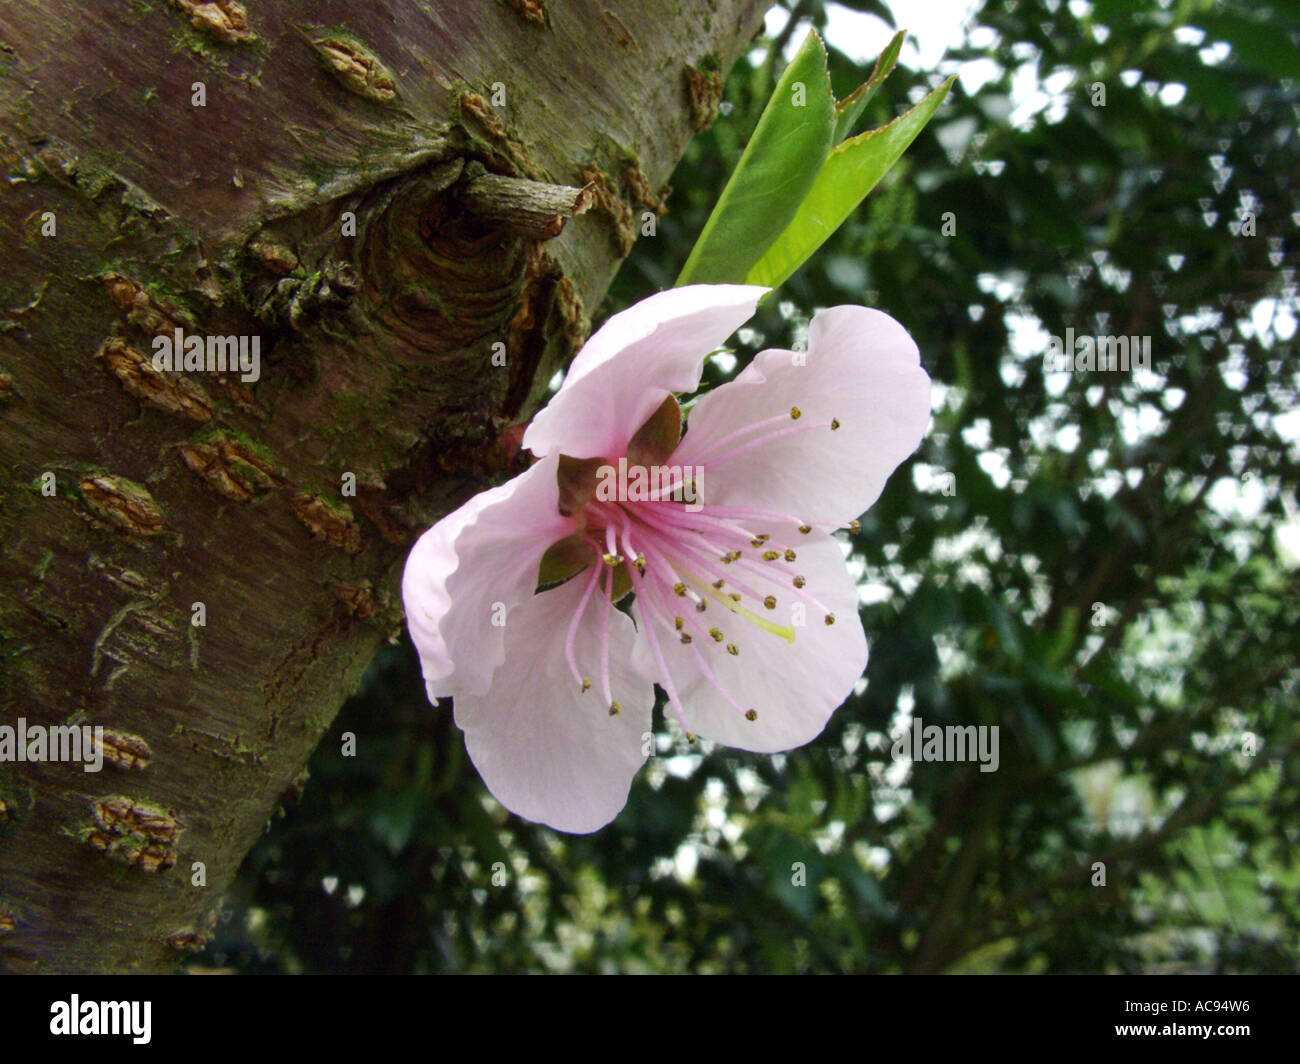 sweet almond (Prunus amygdalus var. dulcis, Prunus dulcis var. dulcis), flowering short shoot at the stem Stock Photo